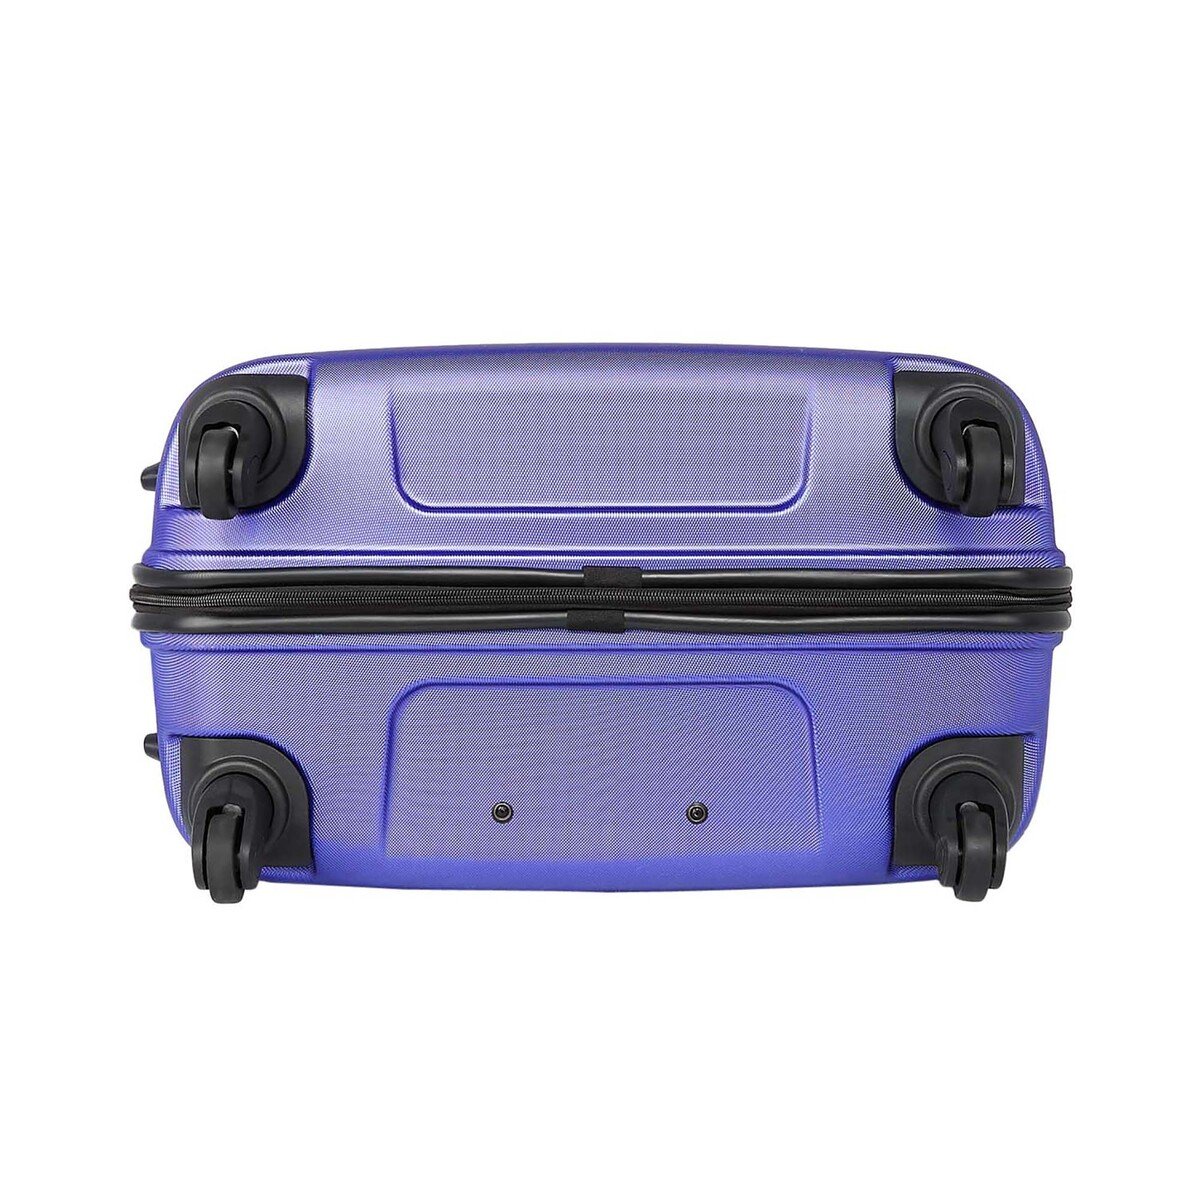 Safari Flo Secure 4Wheel Hard Trolley 3pcs Set (55+65+77cm) Metallic Purple